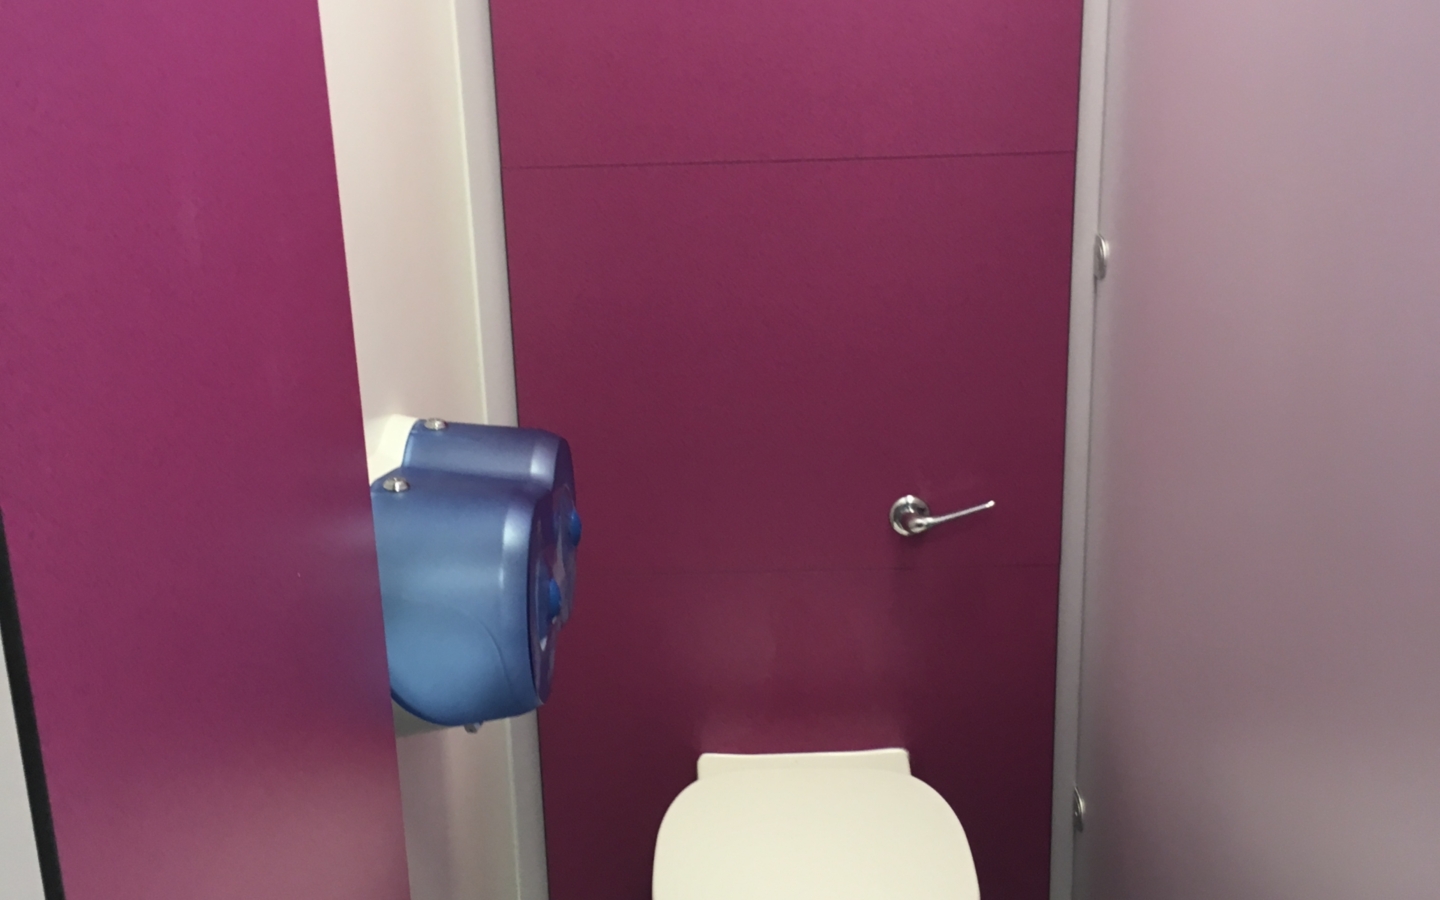 Secondary school changing room toilet refurbishment